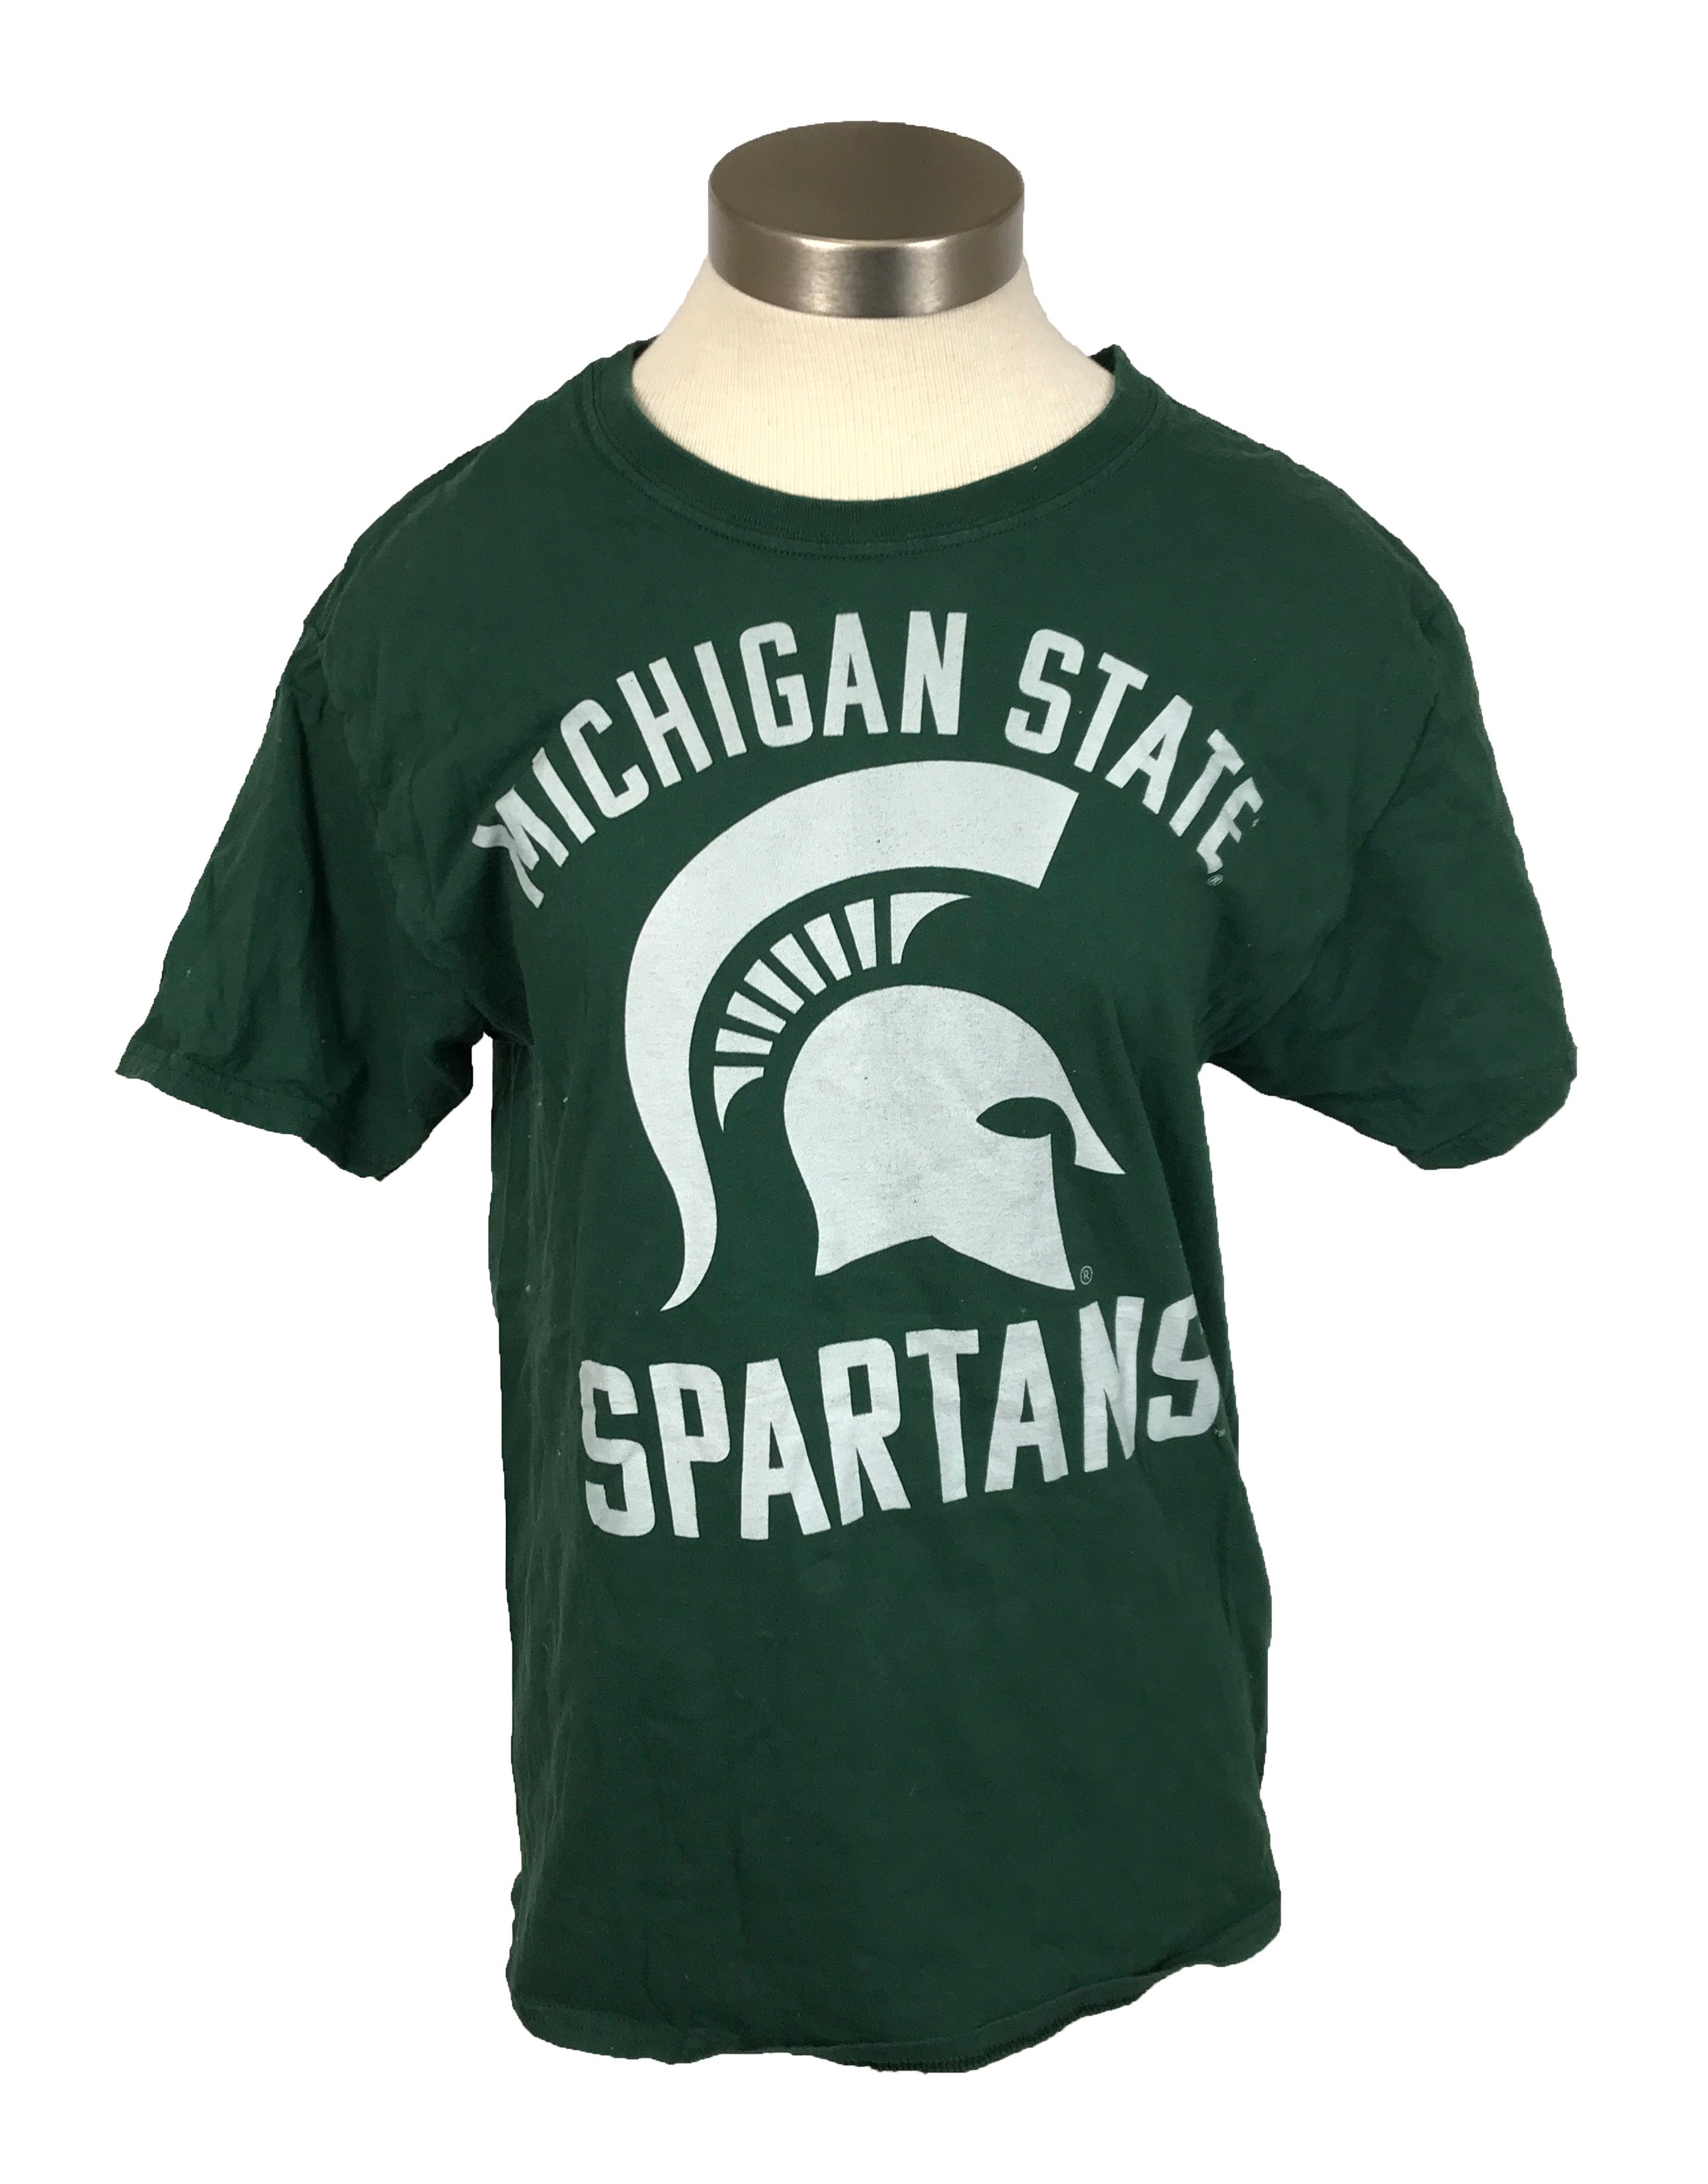 Michigan State Spartans Green T-Shirt Unisex Size Medium